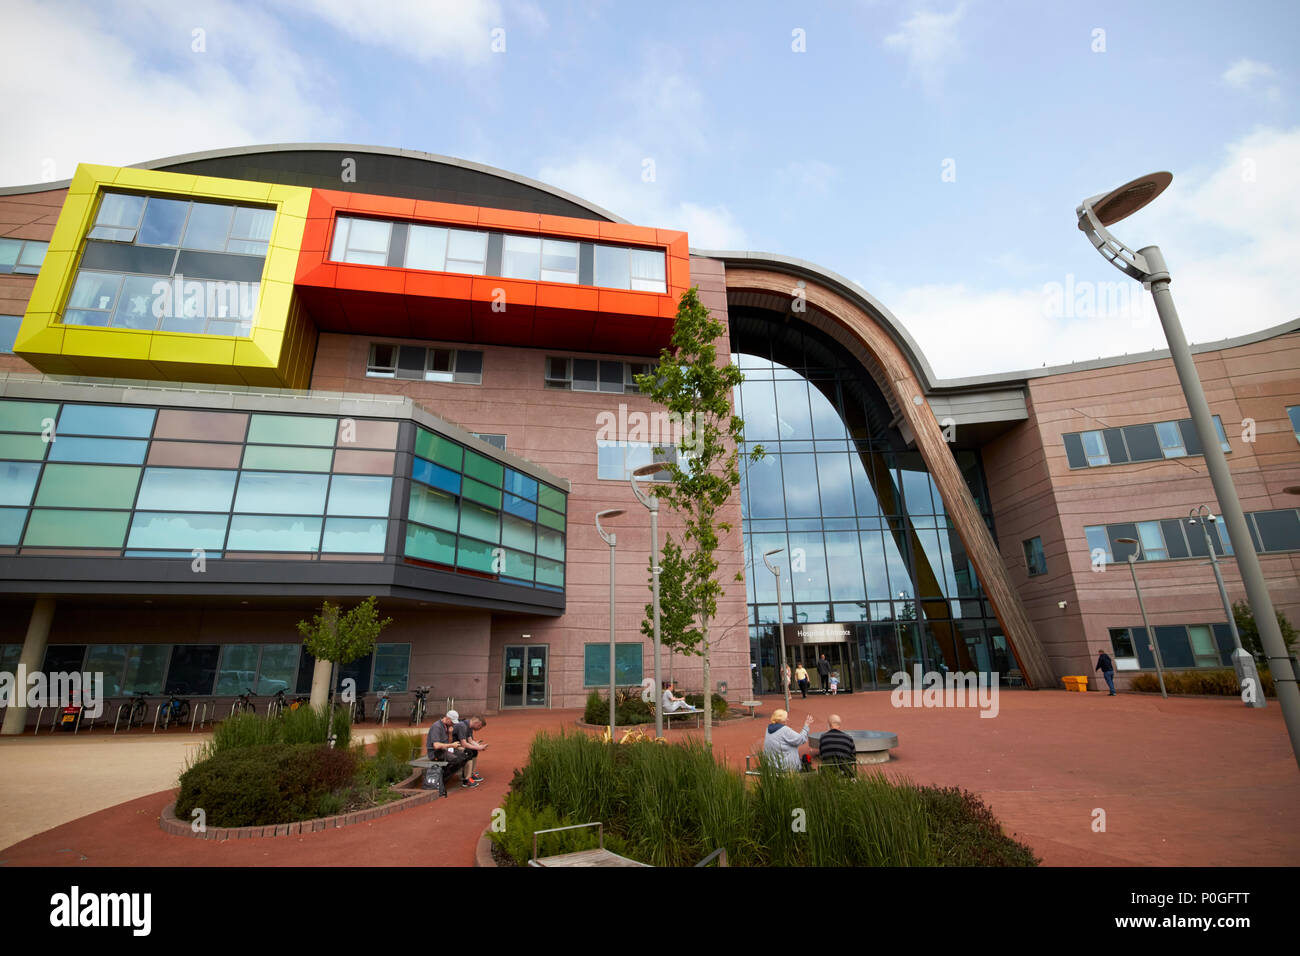 Alder Hey childrens hospital entrance Liverpool England UK Stock Photo